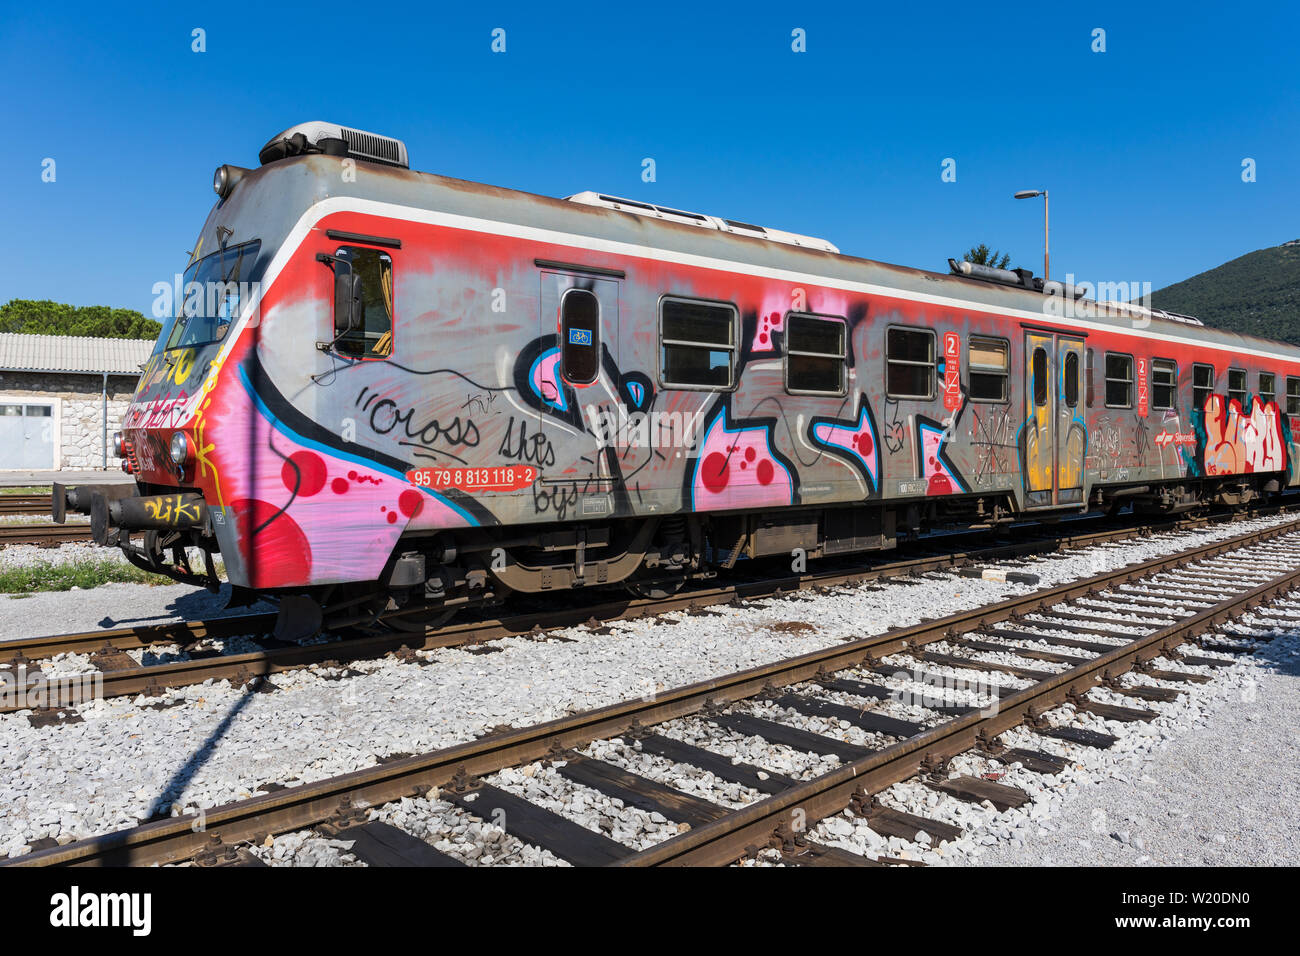 Graffiti covered train at the railway station in Nova Gorica, Slovenia Stock Photo